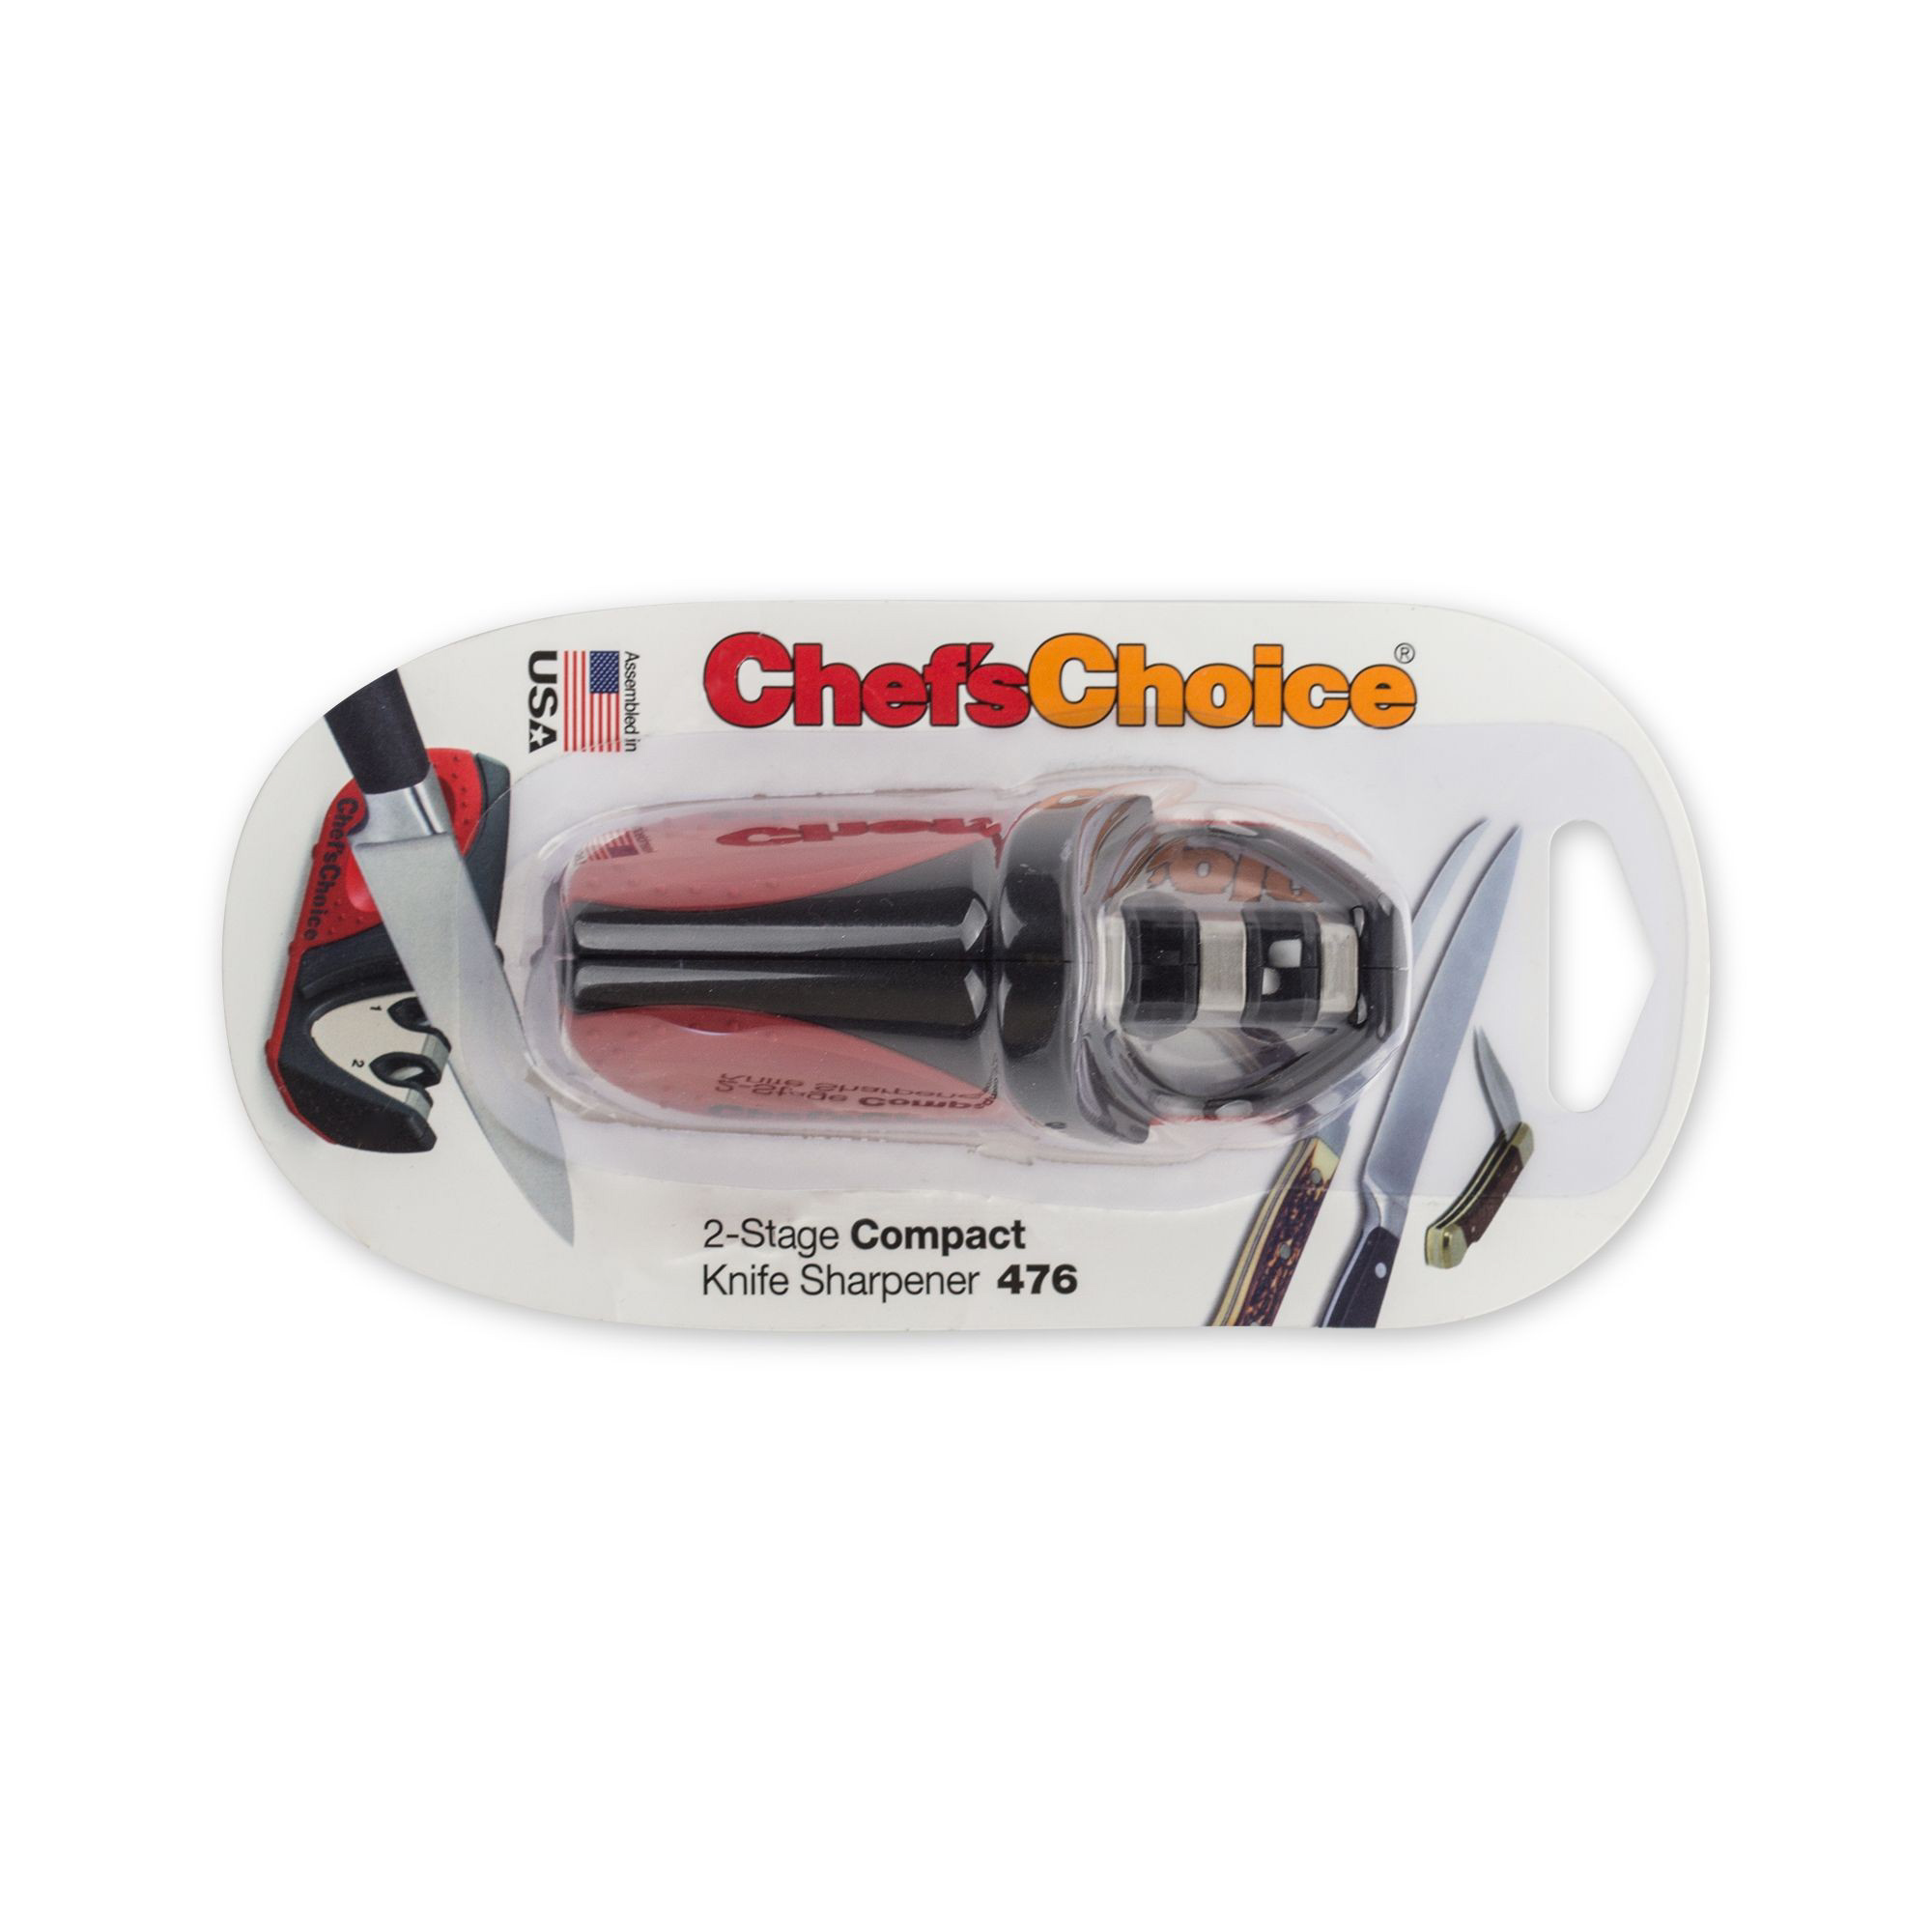 Точилка Chefs Choice Knife sharpeners для ножа, цвет черный - фото 1